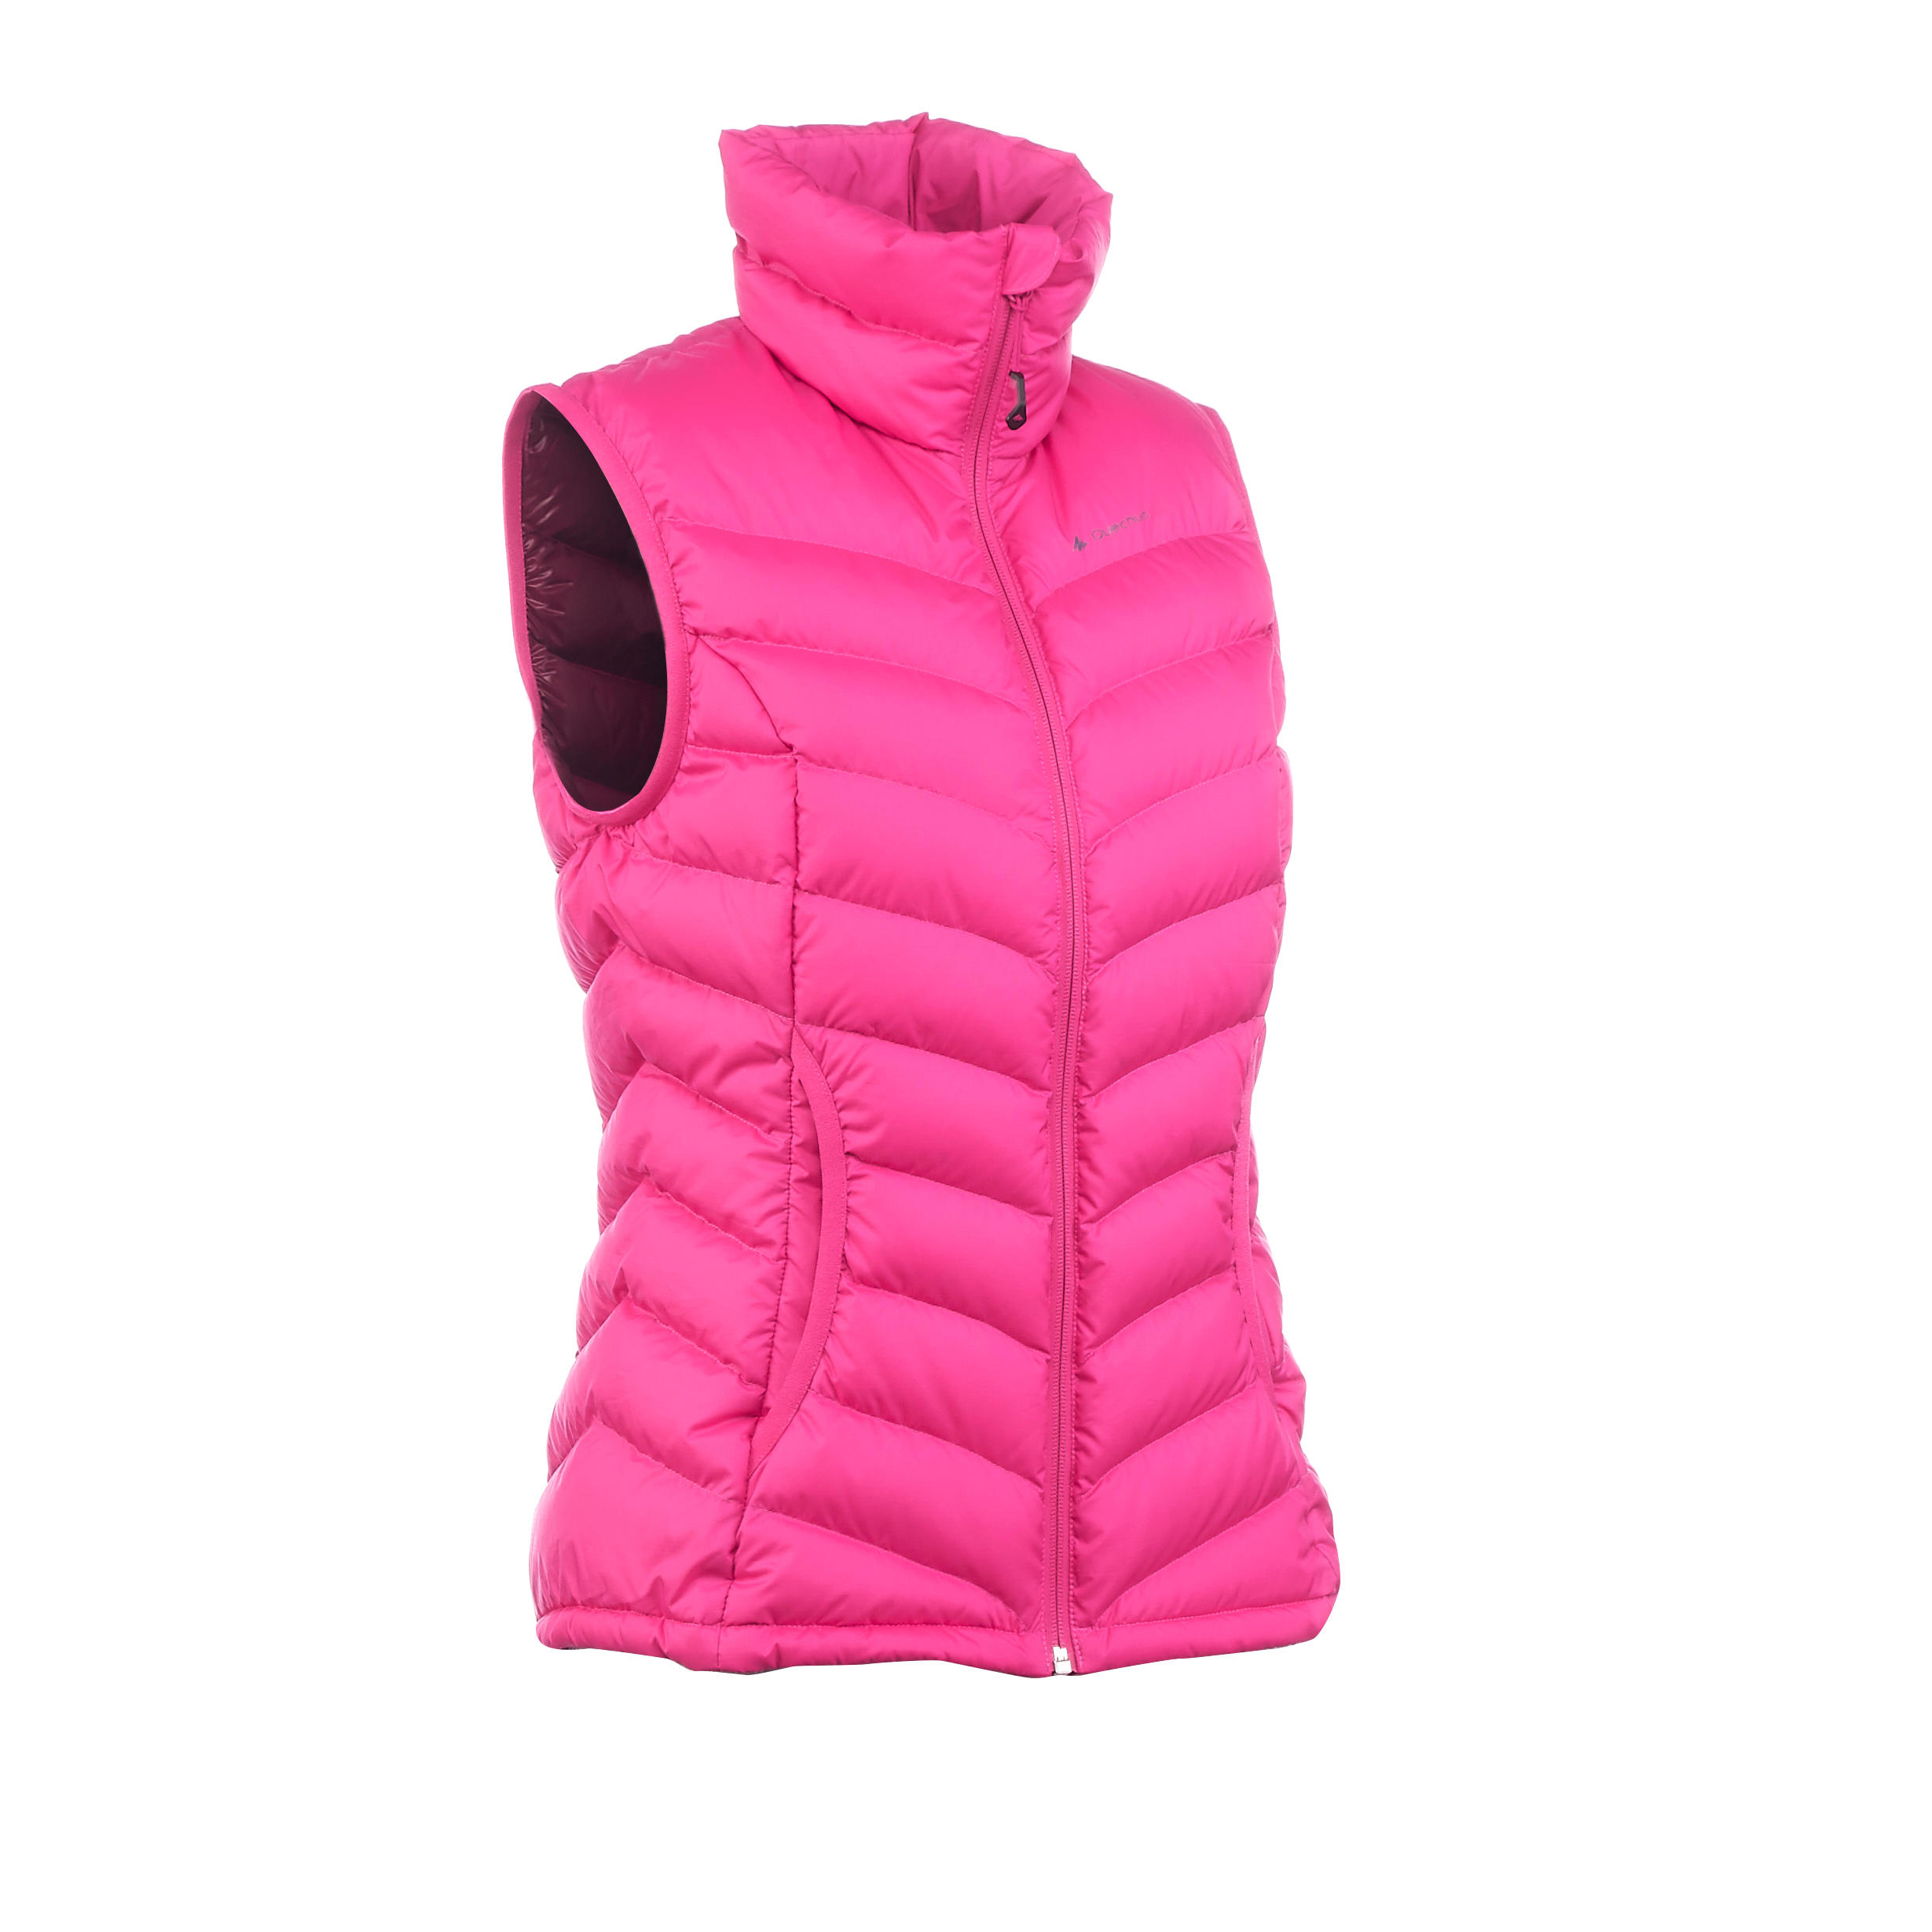 FORCLAZ Women's X-Warm pink trekking full down gilet (sleeveless down jacket)